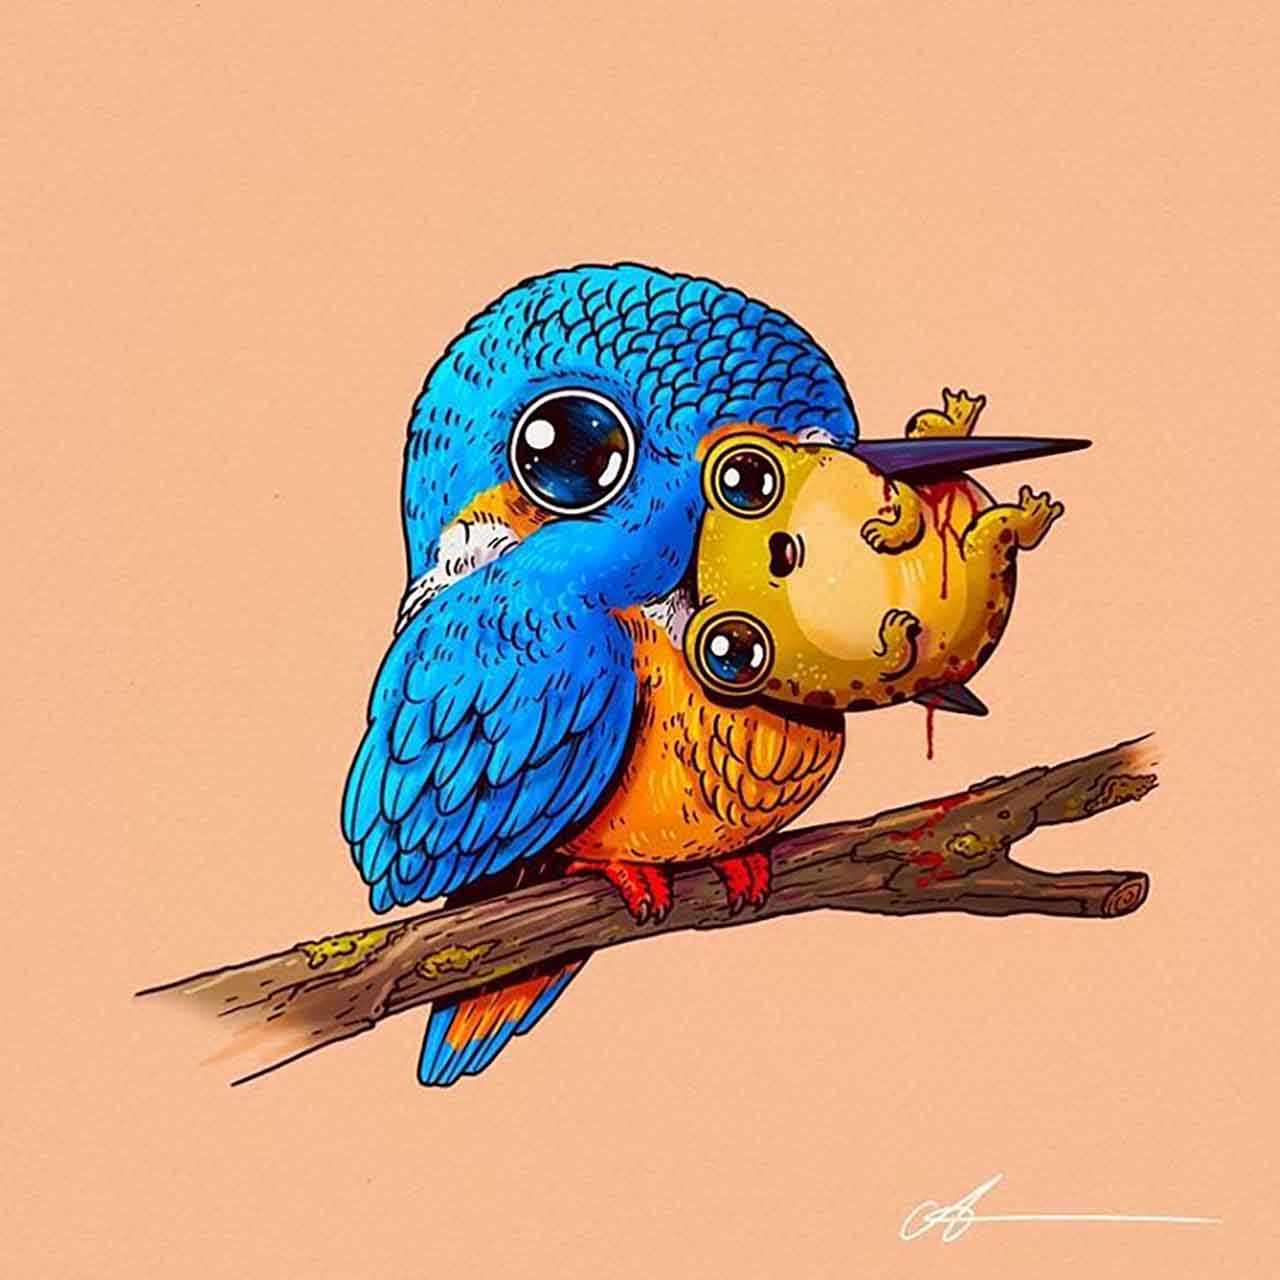  Artist Creates Extremely Adorable “Predator & Prey” Illustrations #2: Kingfisher & Frog 